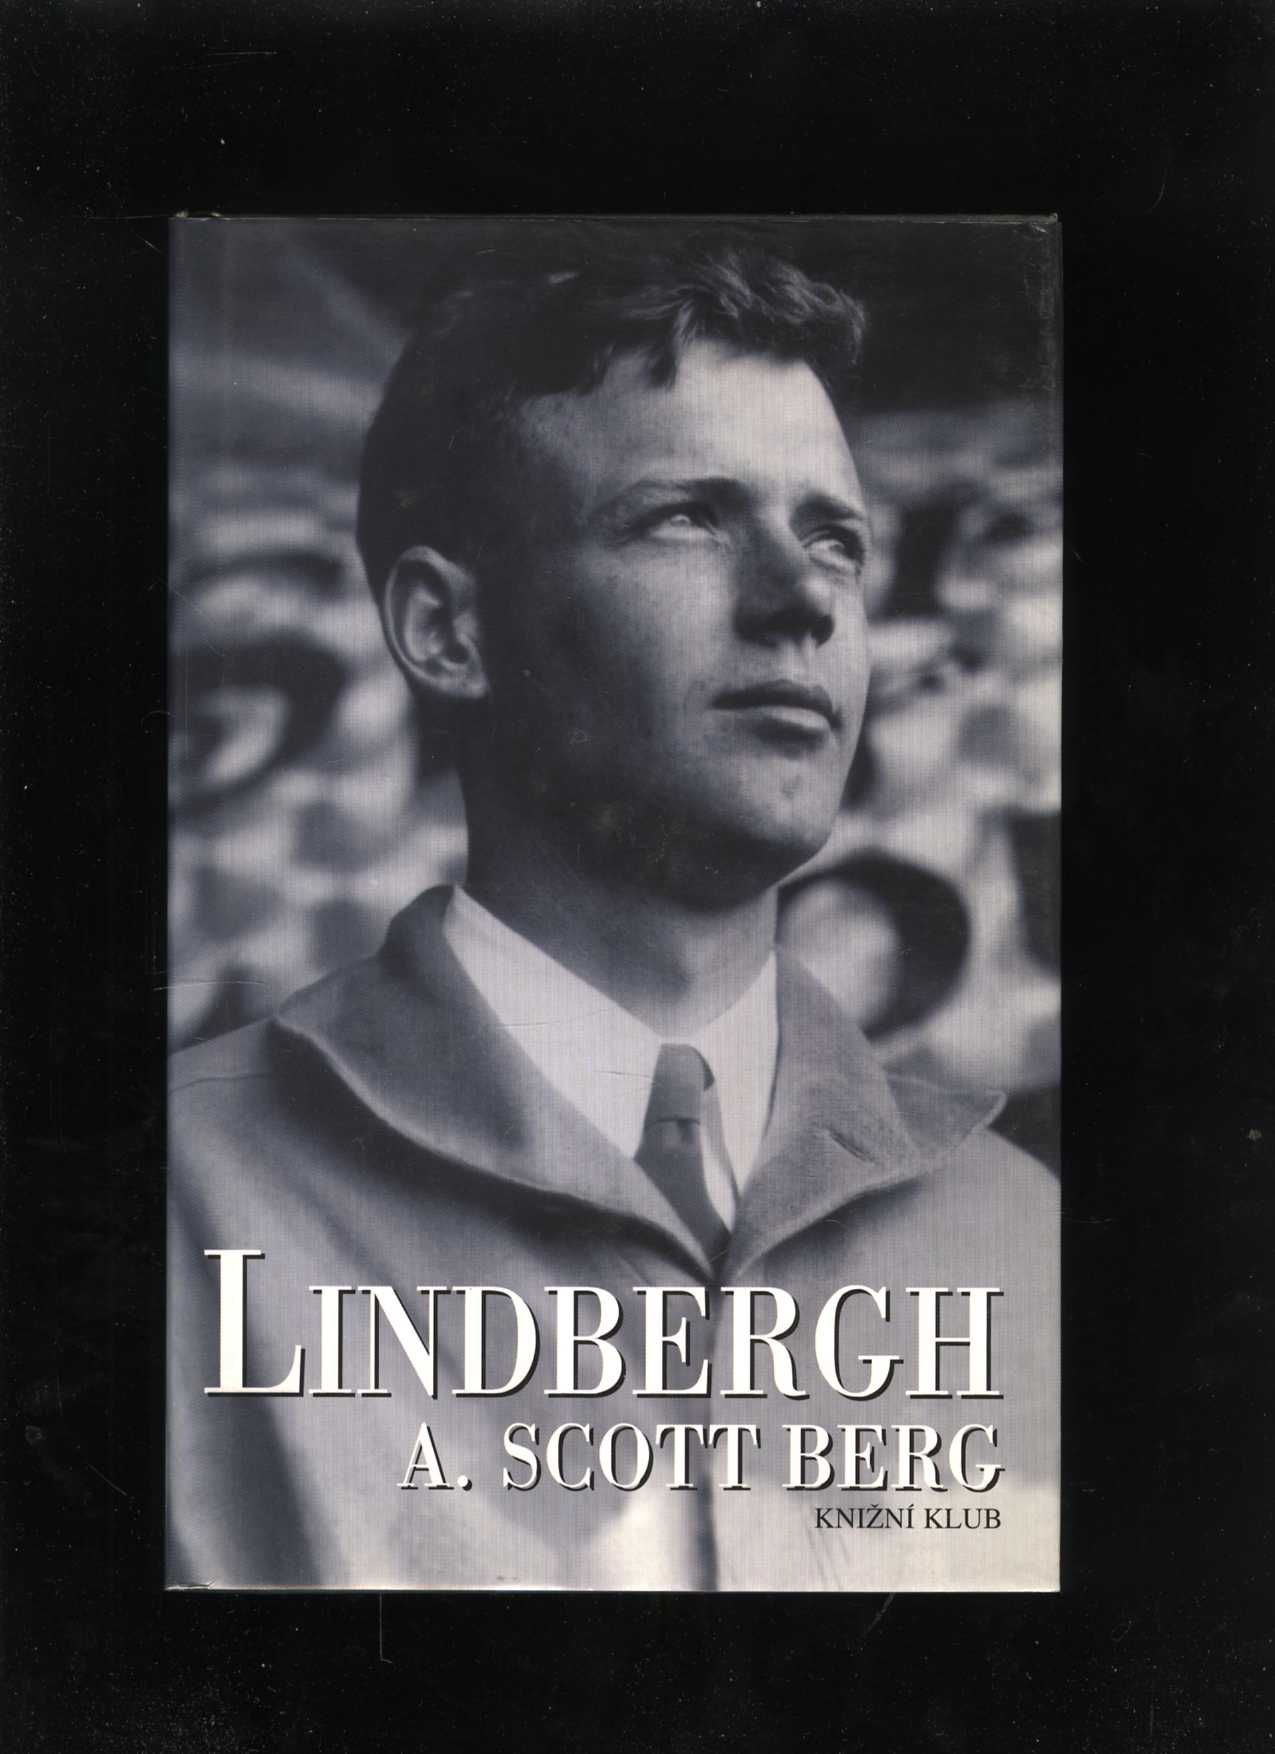 Lindbergh (Andrew Scott Berg)